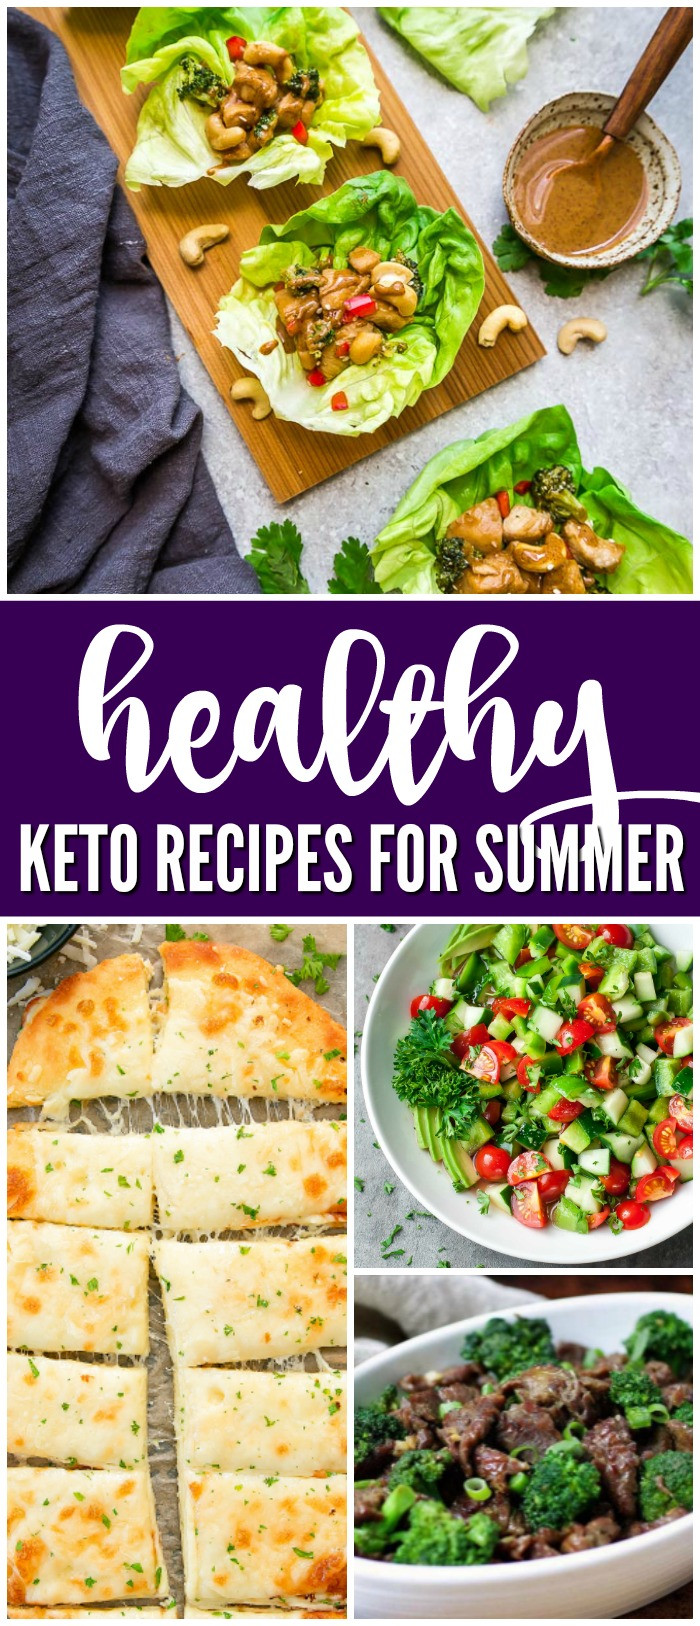 Healthy Keto Dinner Recipes
 Healthy Keto Recipes for Summer